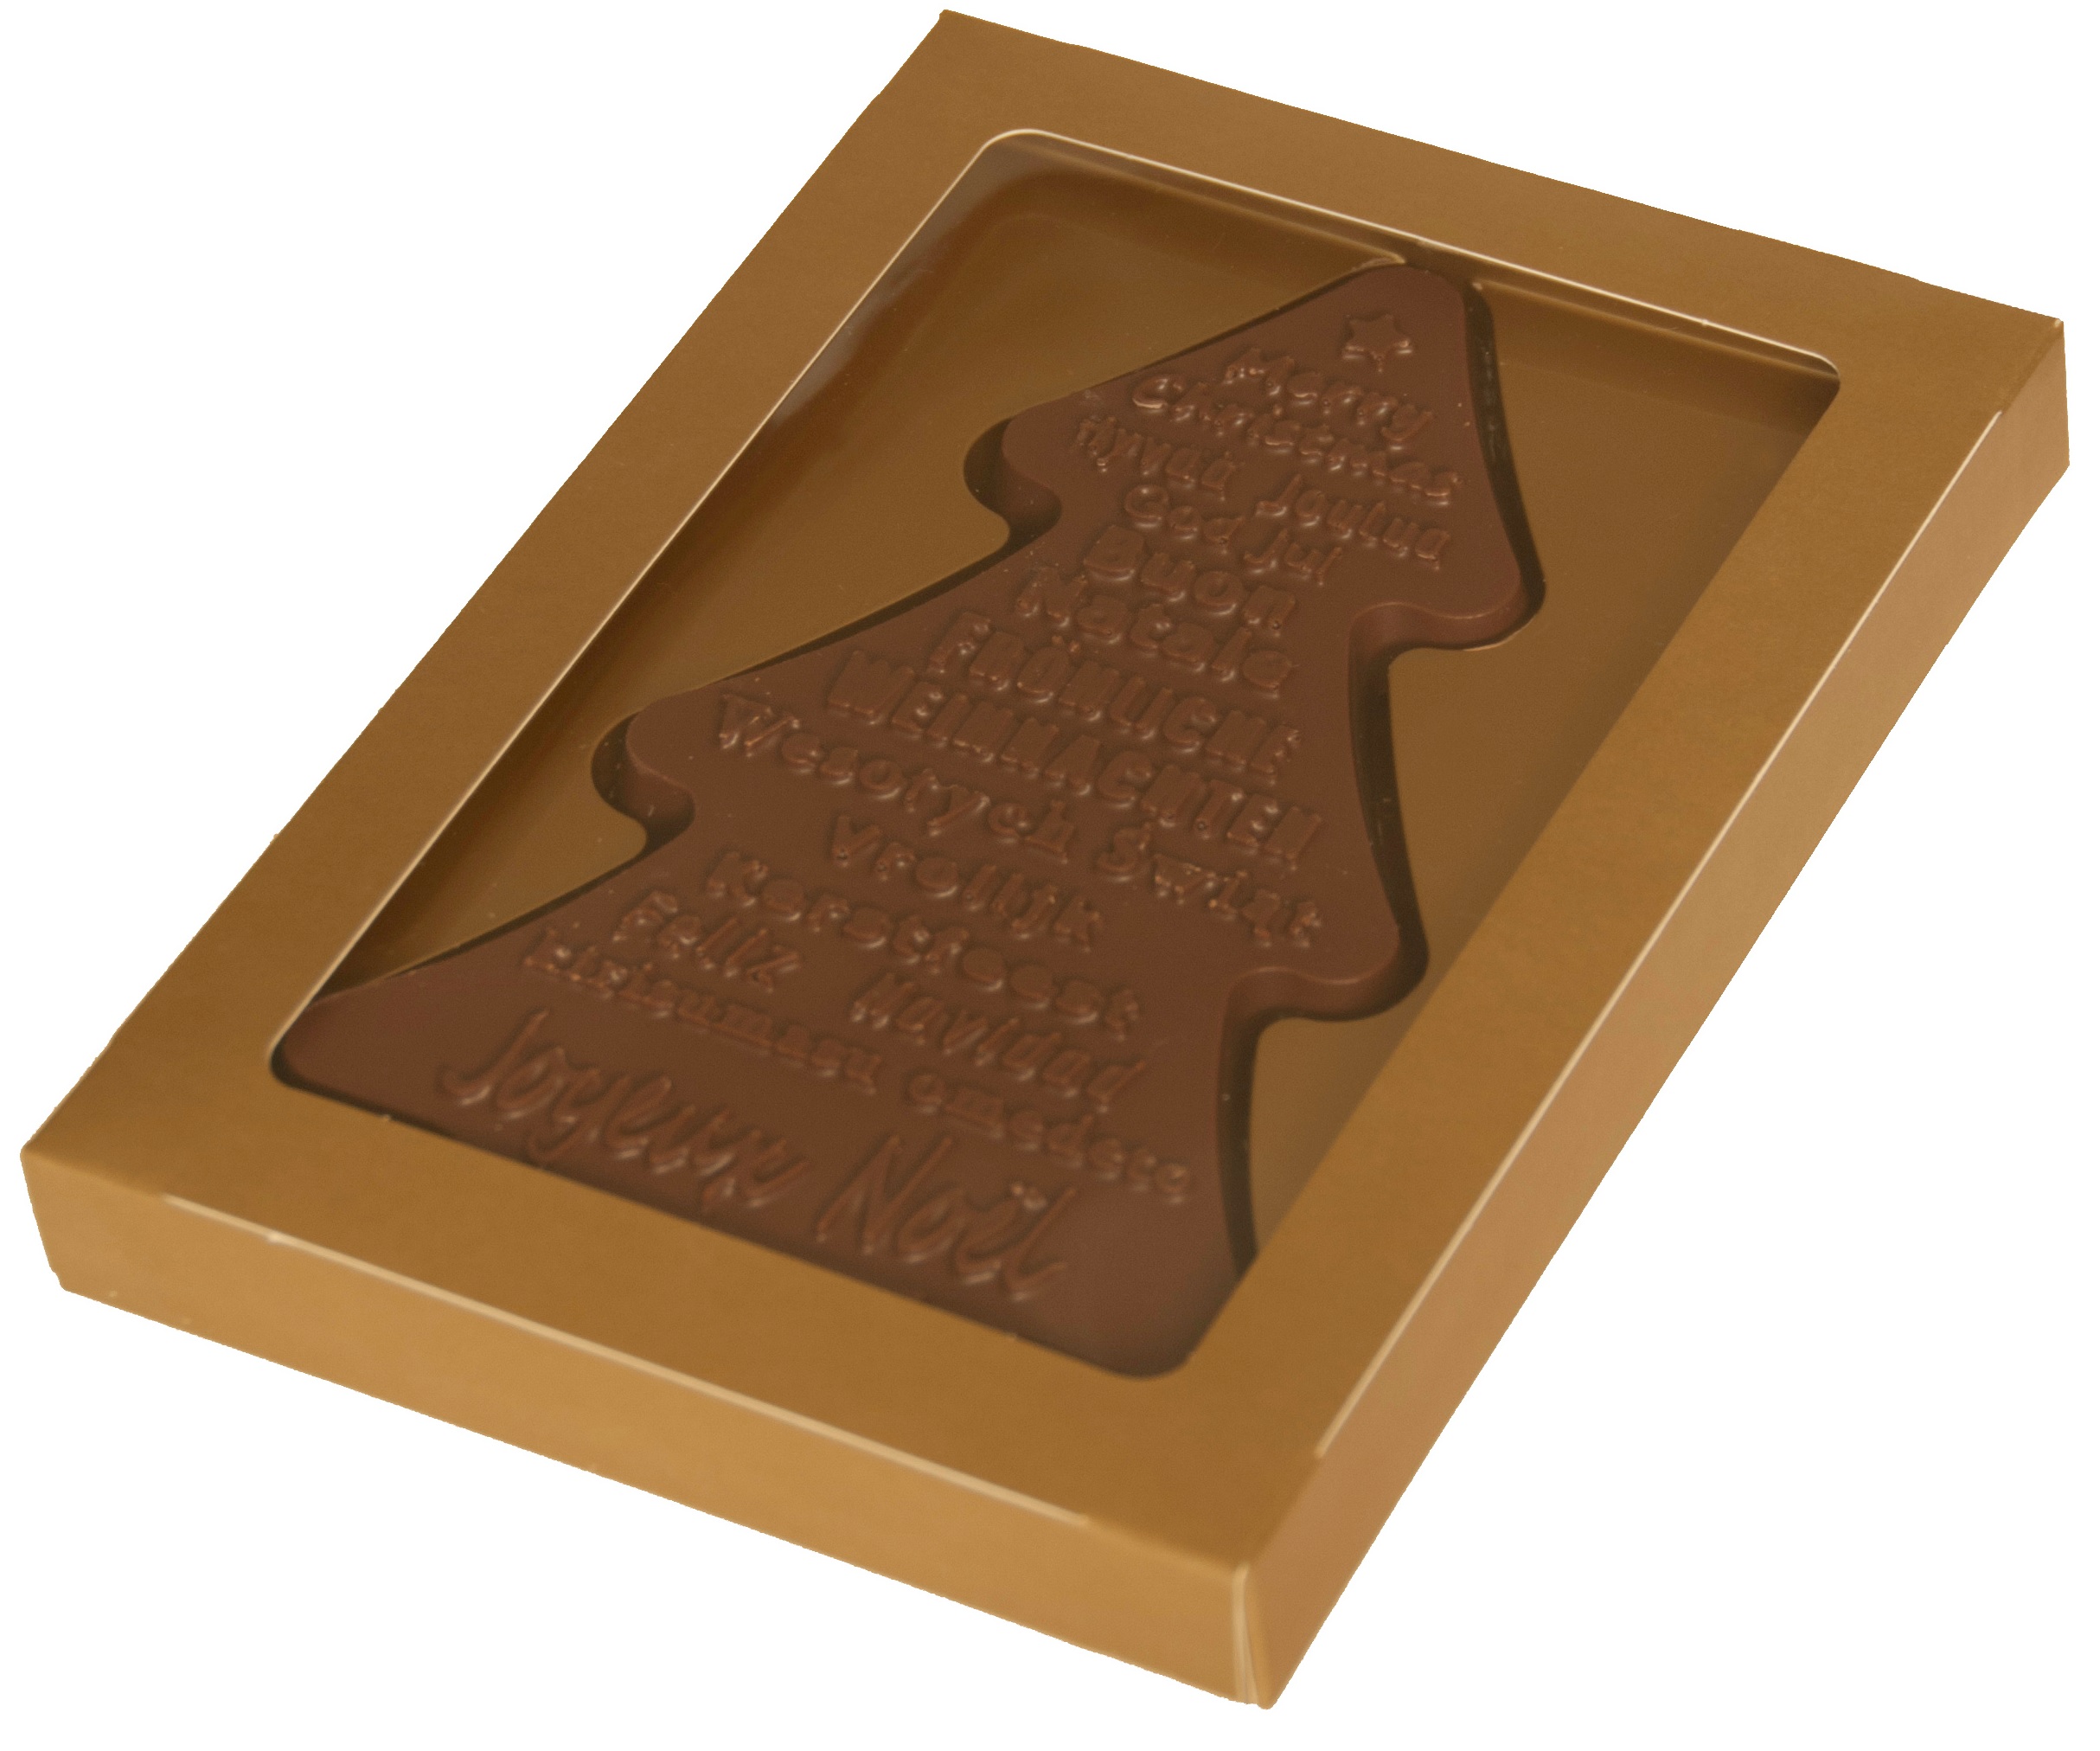 https://frezon.nl/media/catalog/product/c/h/chocolade.wensboom.kerststhema.frezon.jpg